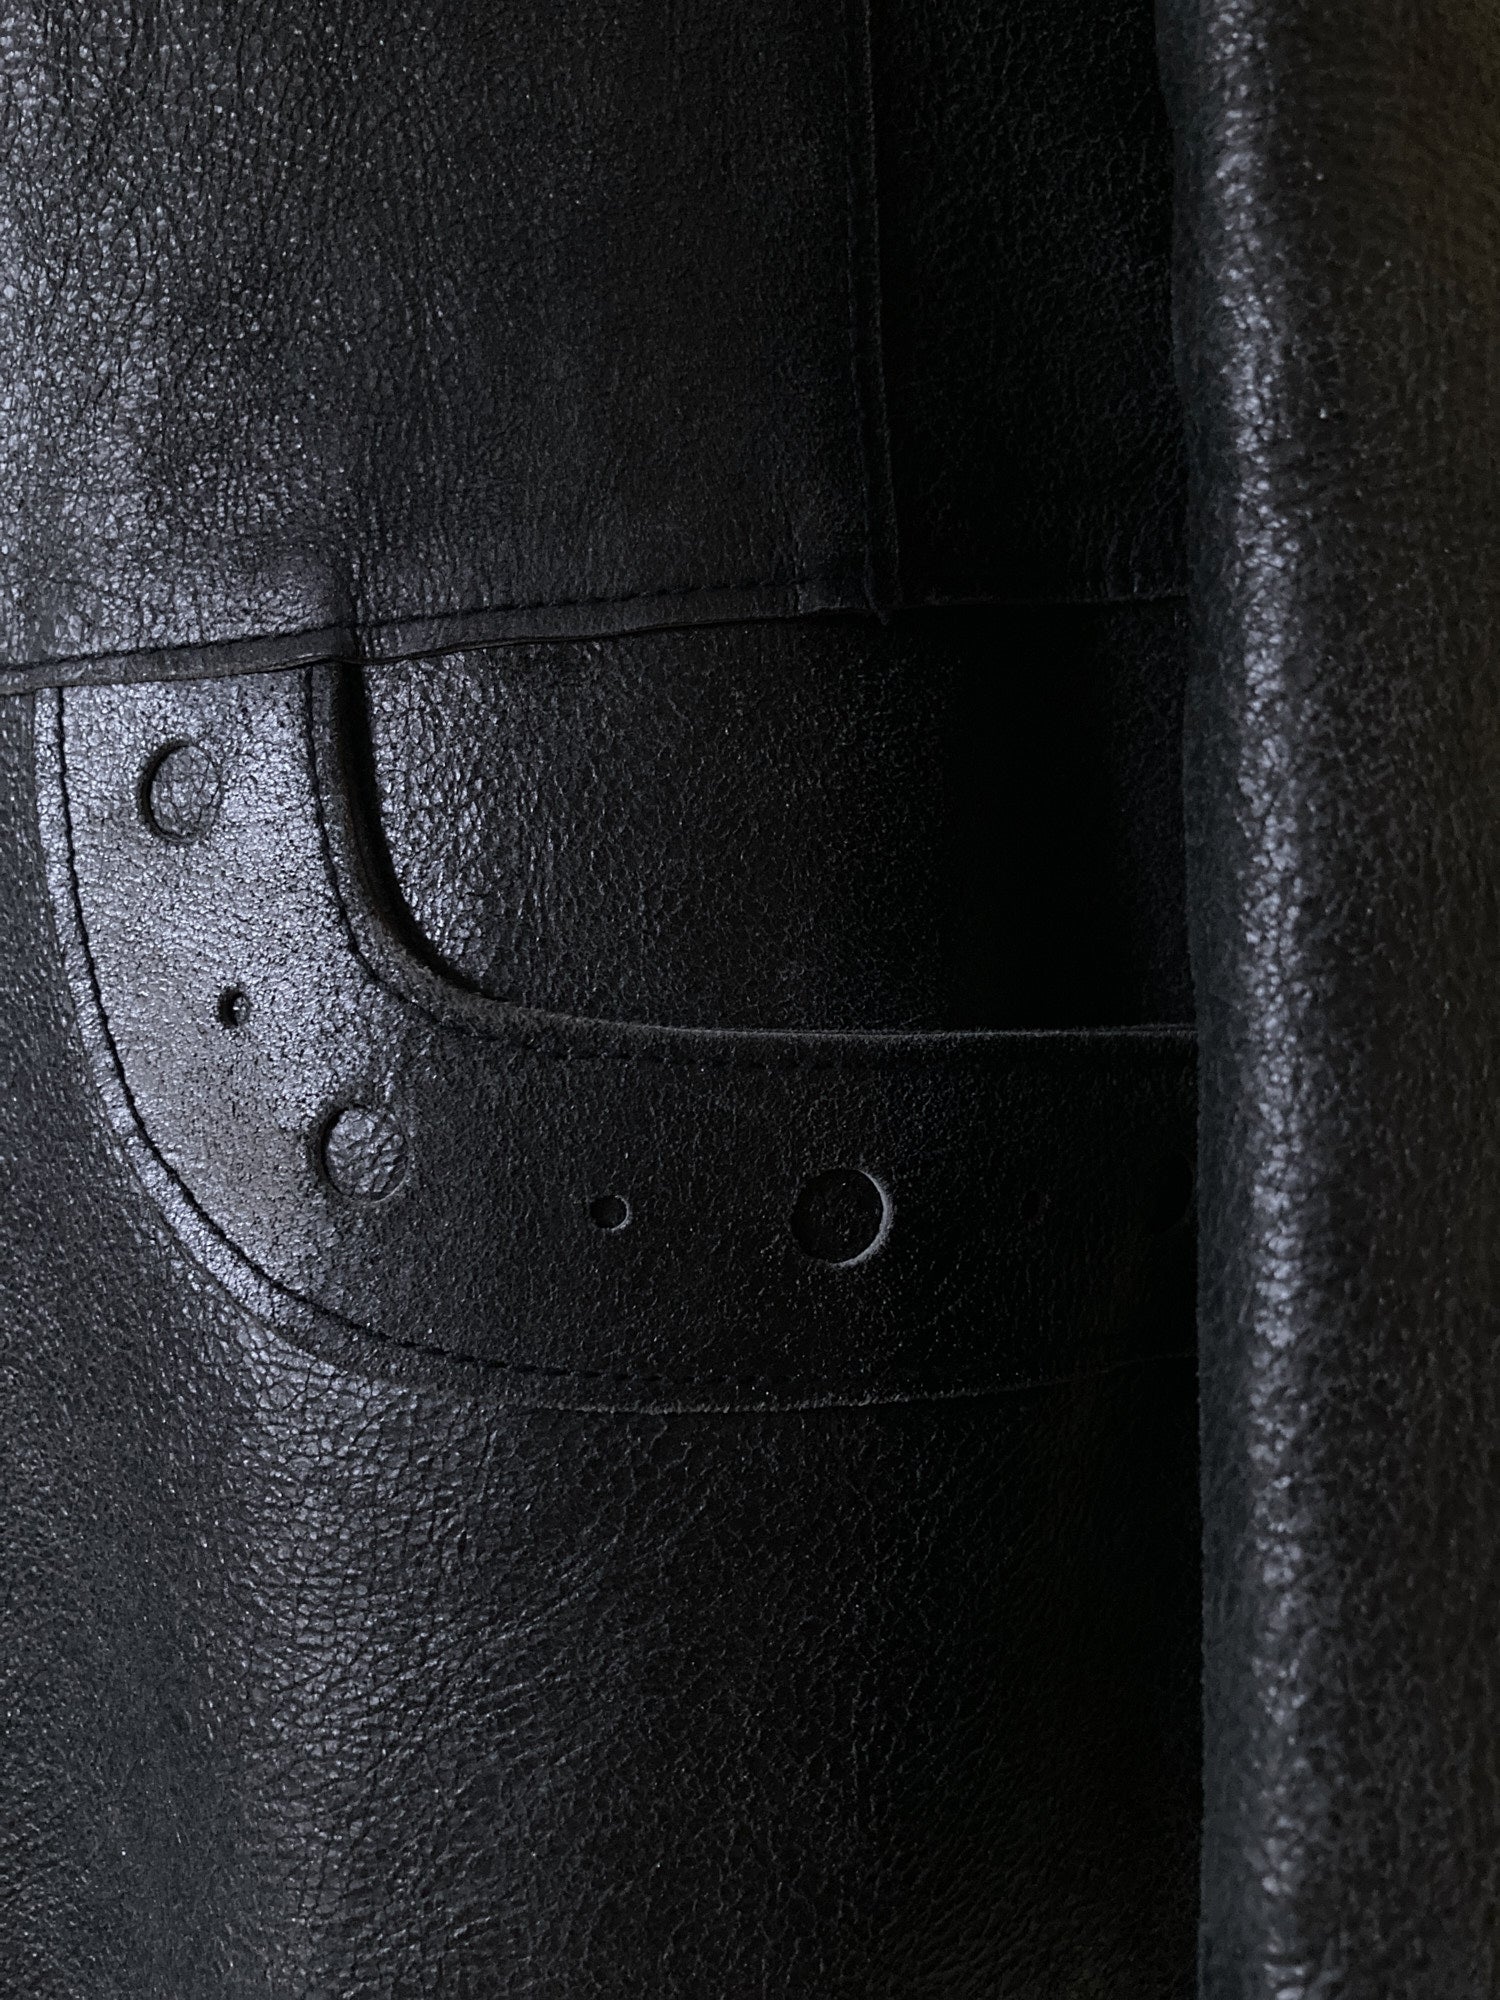 Kosuke Tsumura 1990s black leather zip coat with detachable faux fur collar